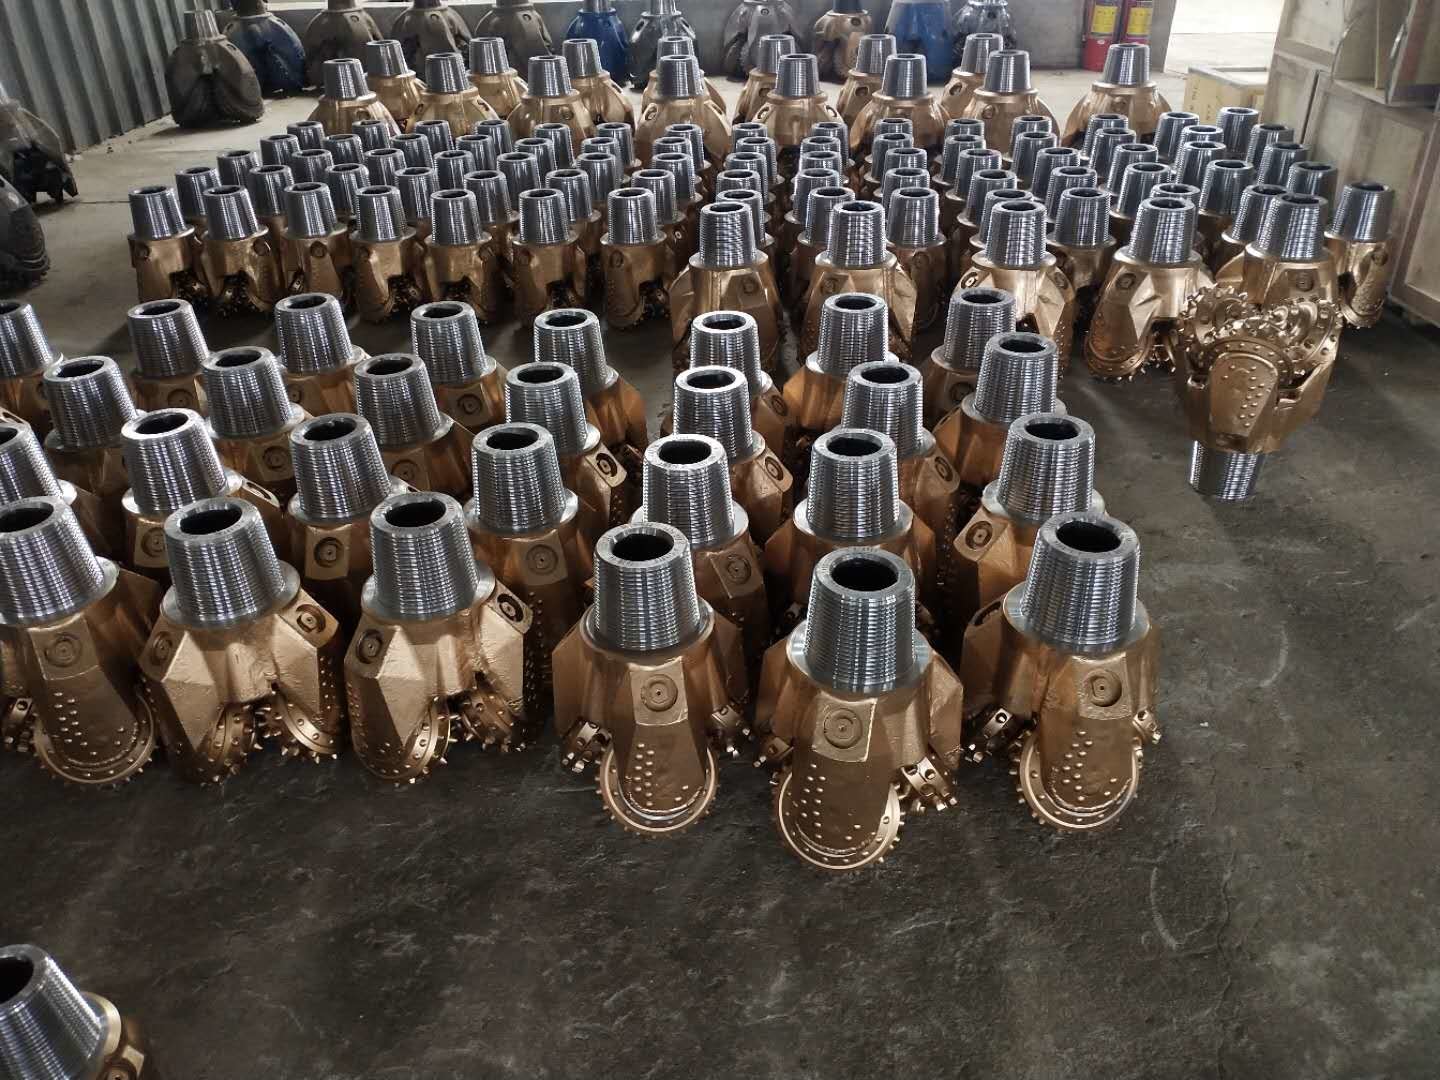 Porcellana Hebei Yichuan Drilling Equipment Manufacturing Co., Ltd Profilo Aziendale